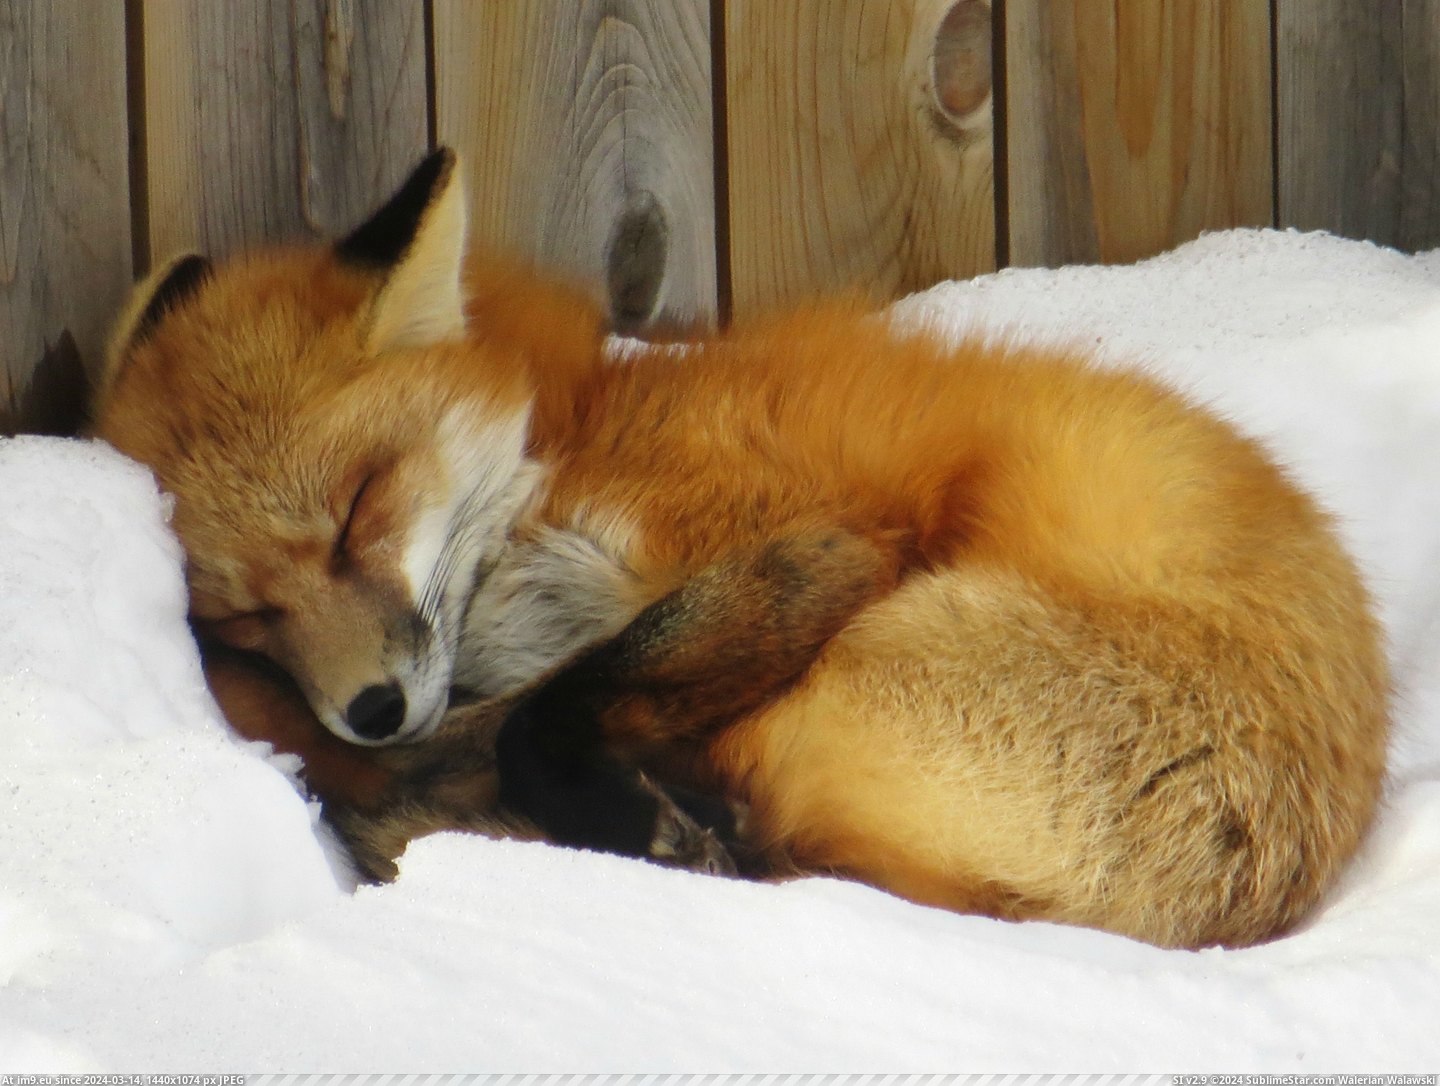 #Red #Canada #Alberta #Backyard #Fox #Sleeping [Pics] Red fox sleeping in my backyard! Alberta, Canada. 1 Pic. (Image of album My r/PICS favs))